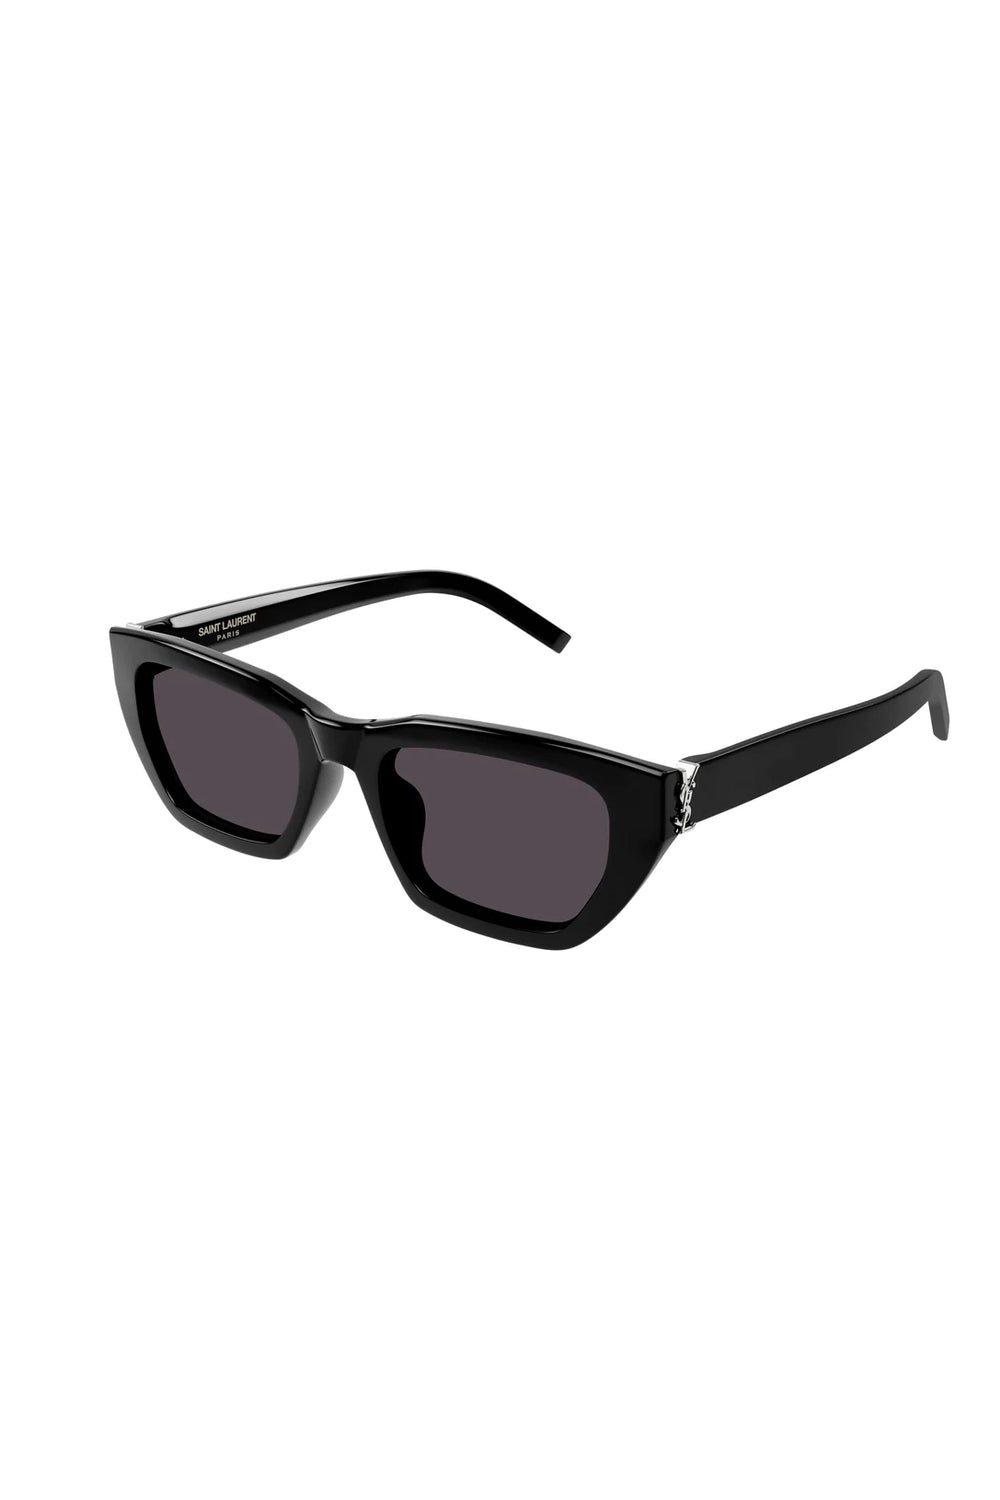 Saint Laurent Squared Sunglasses Black SLM127F 001